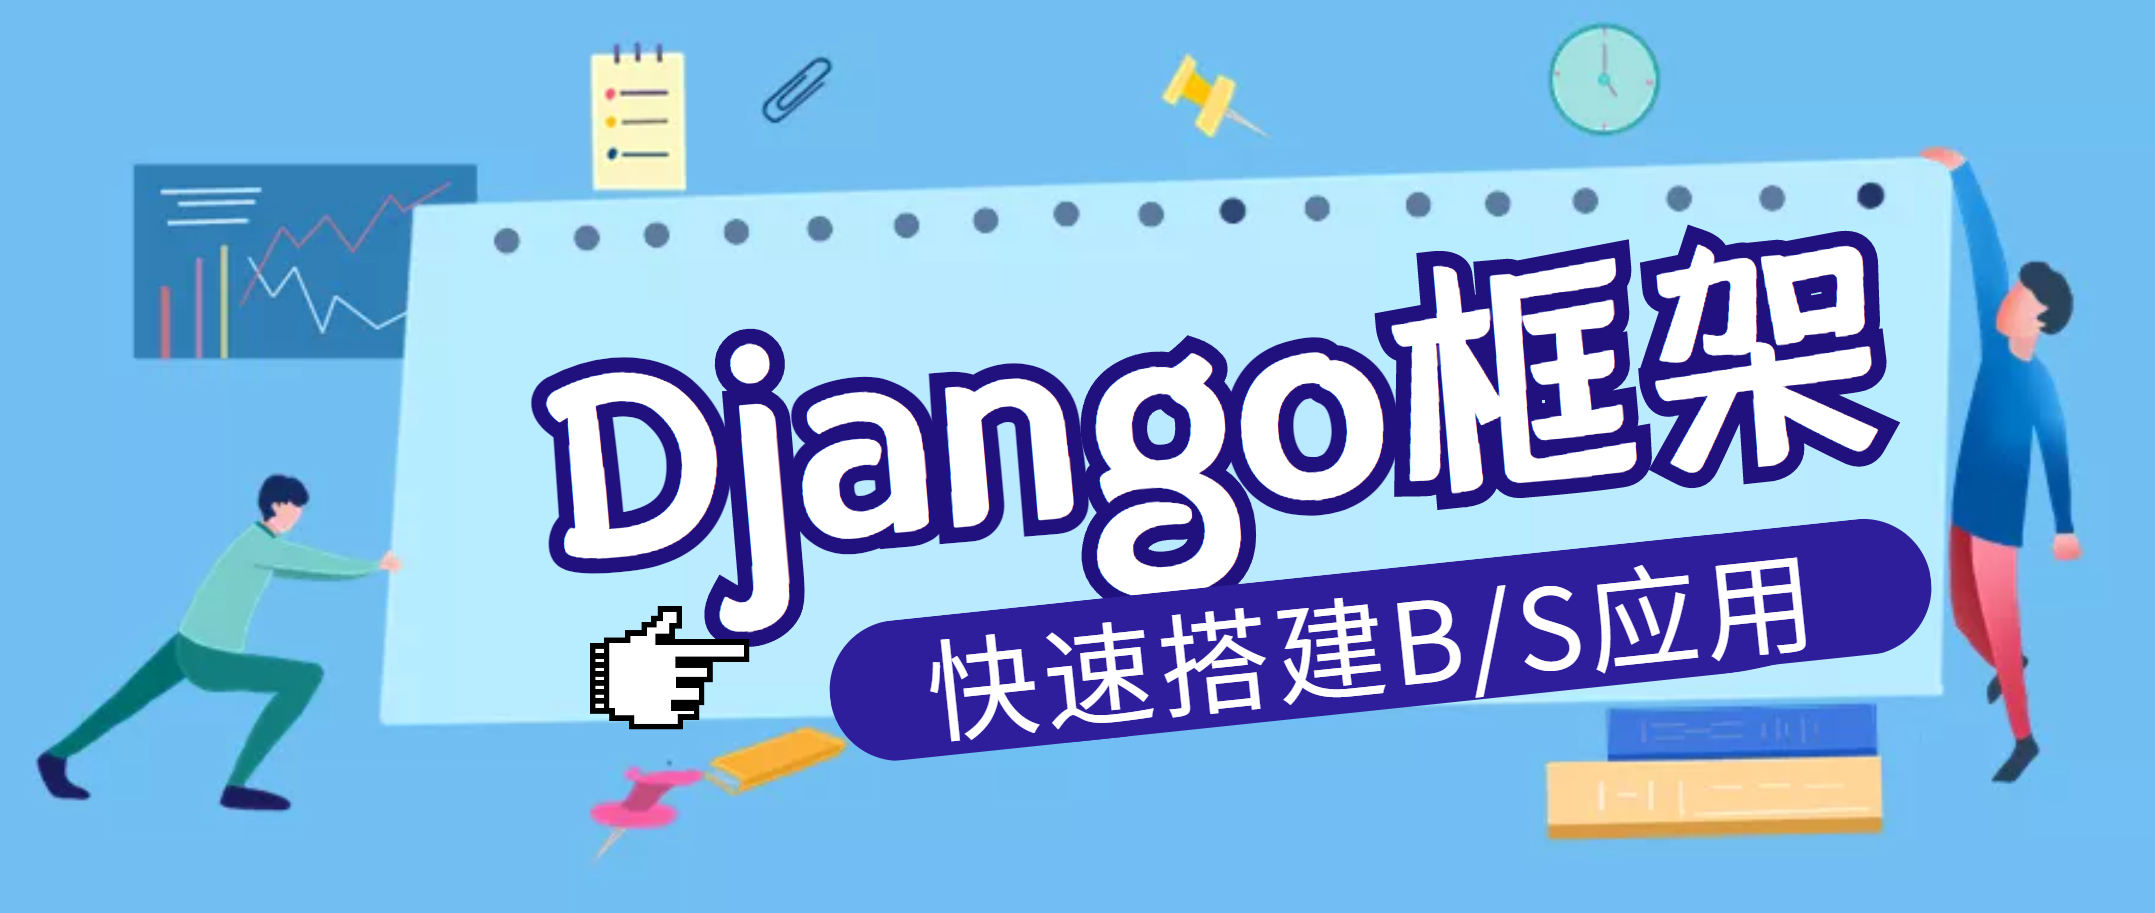 Django介绍